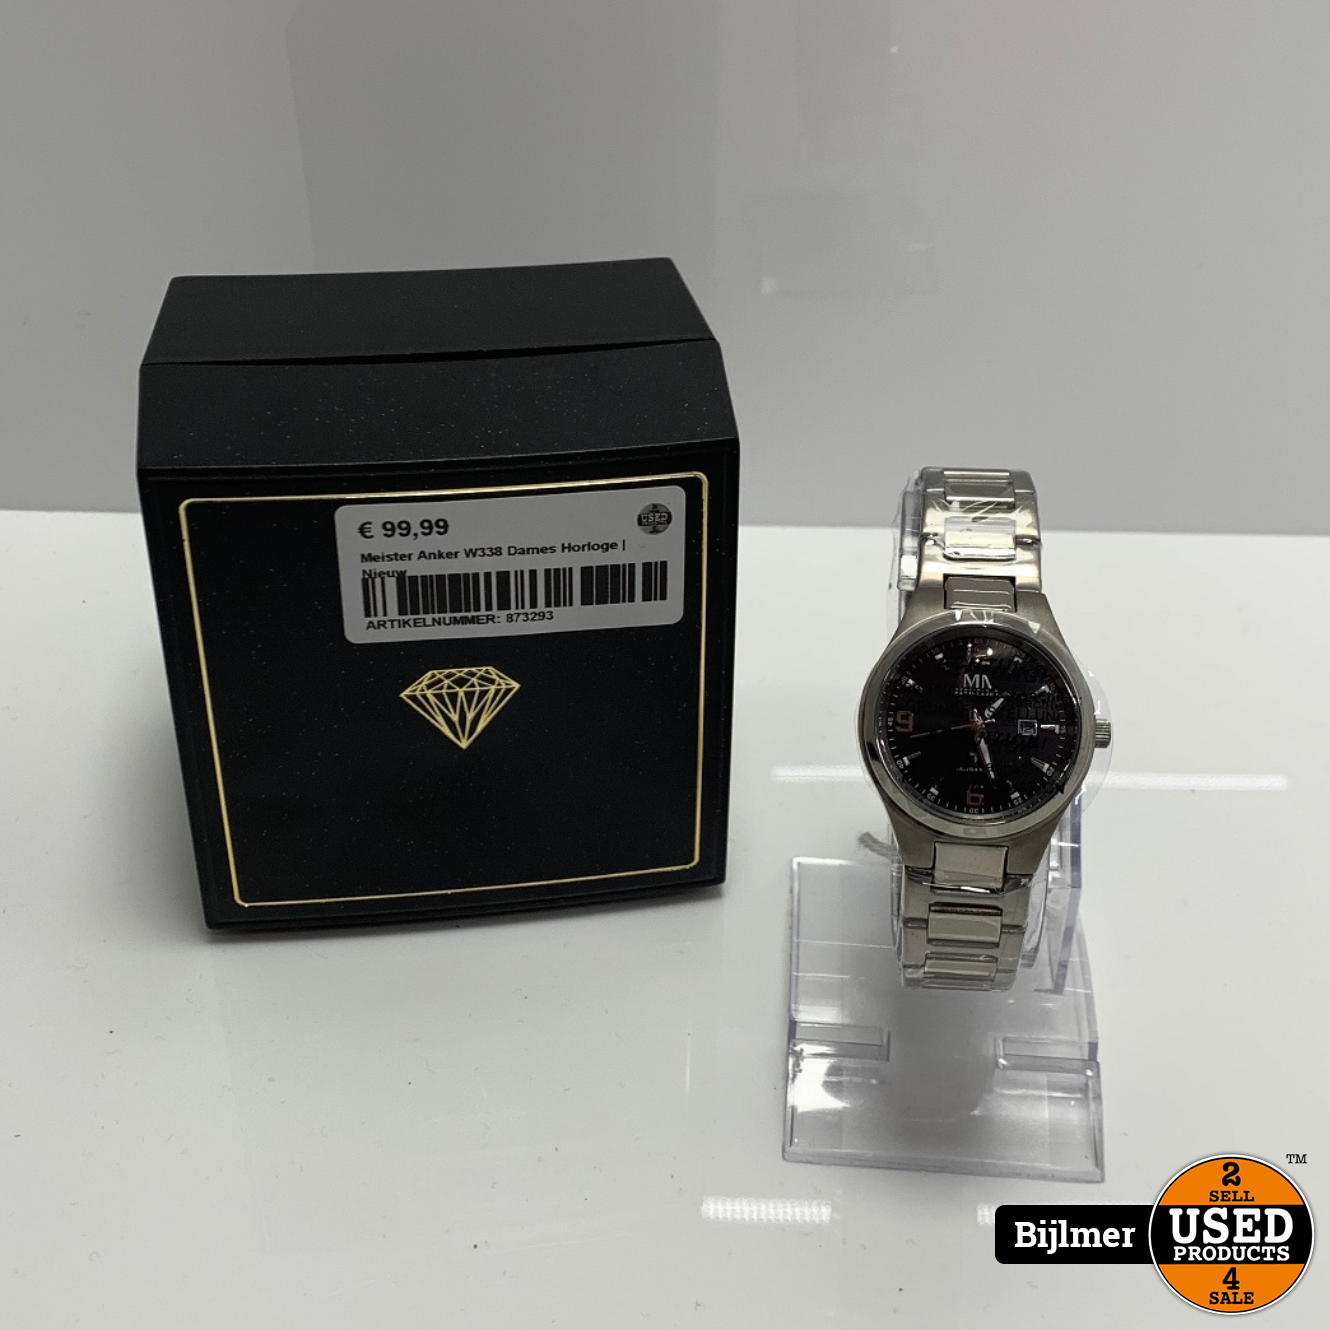 Klooster Politiebureau zweep Meister Anker W338 Dames Horloge | Nieuw - Used Products Amsterdam Bijlmer